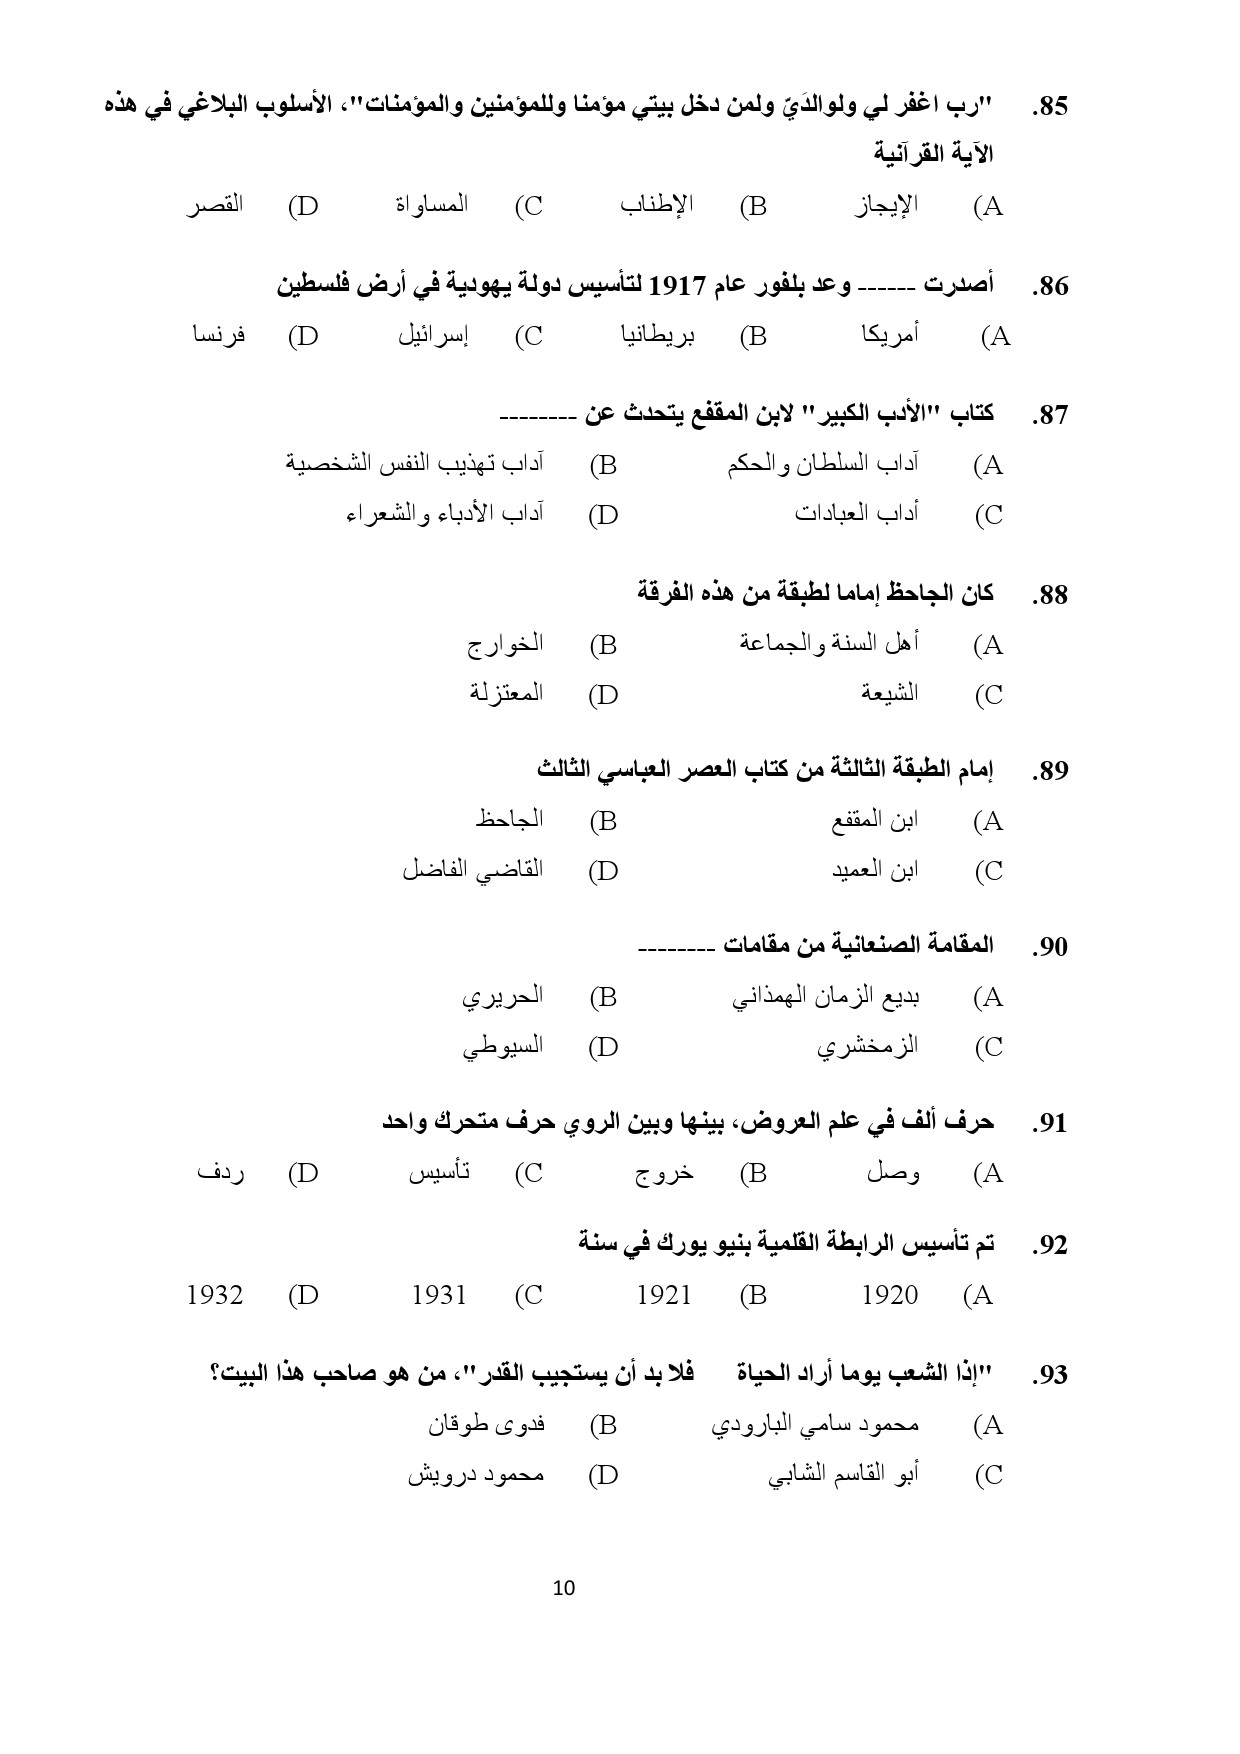 Kerala SET Arabic Exam Question Paper February 2020 10